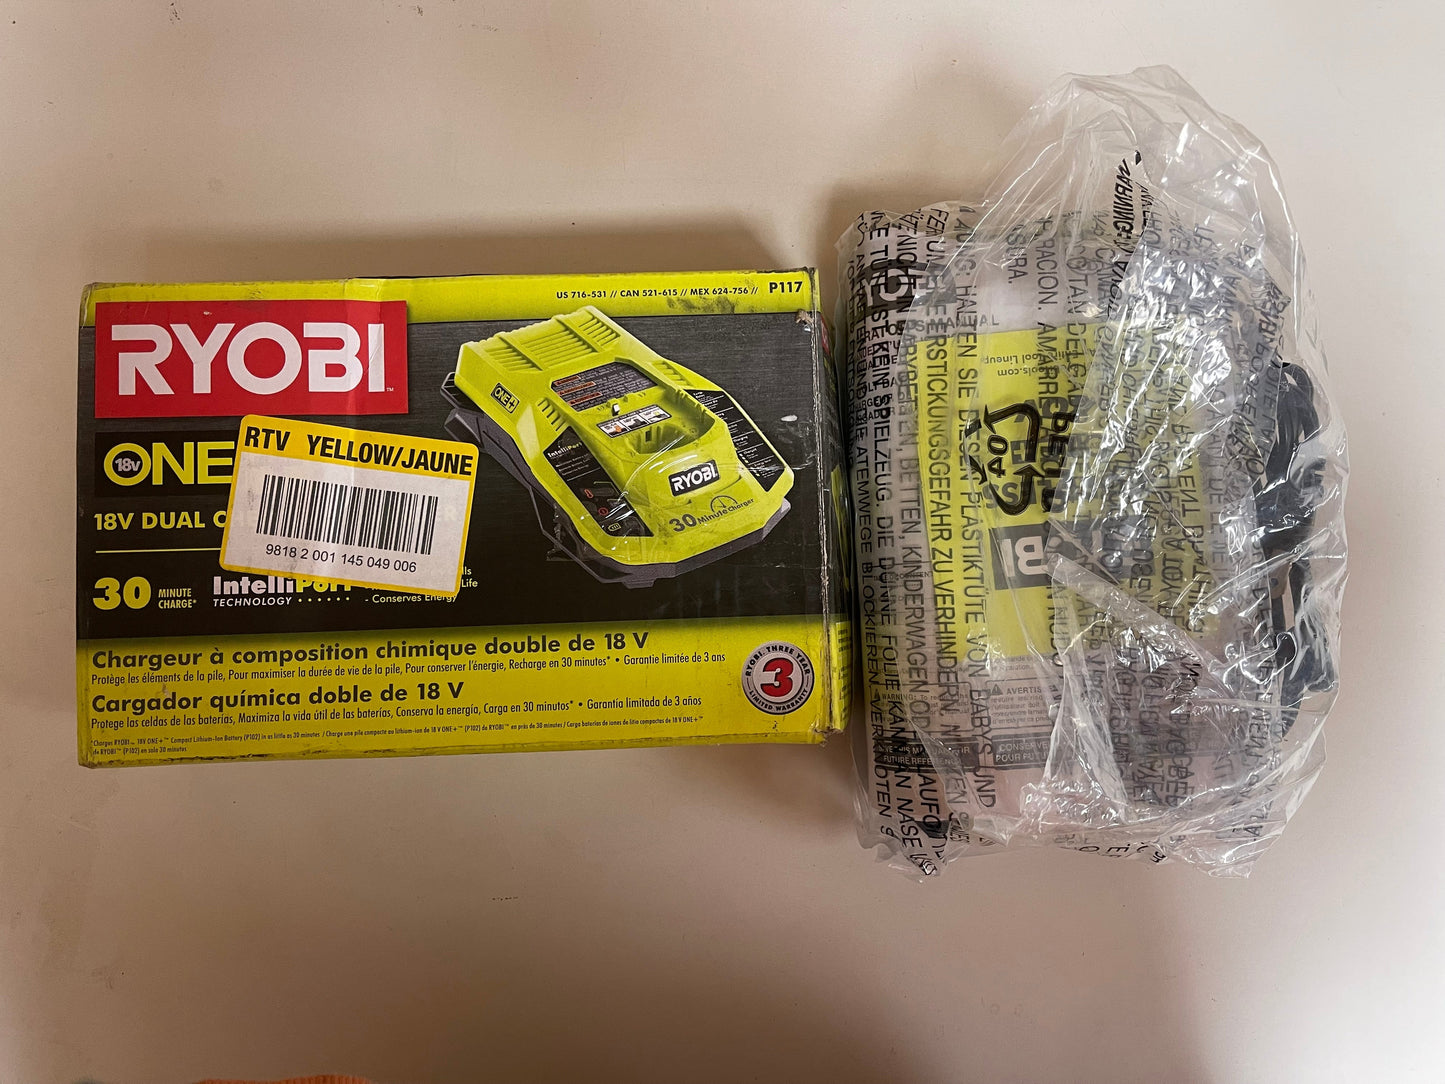 Ryobi One Plus 18V Dual Intelliport Charger Damaged Box